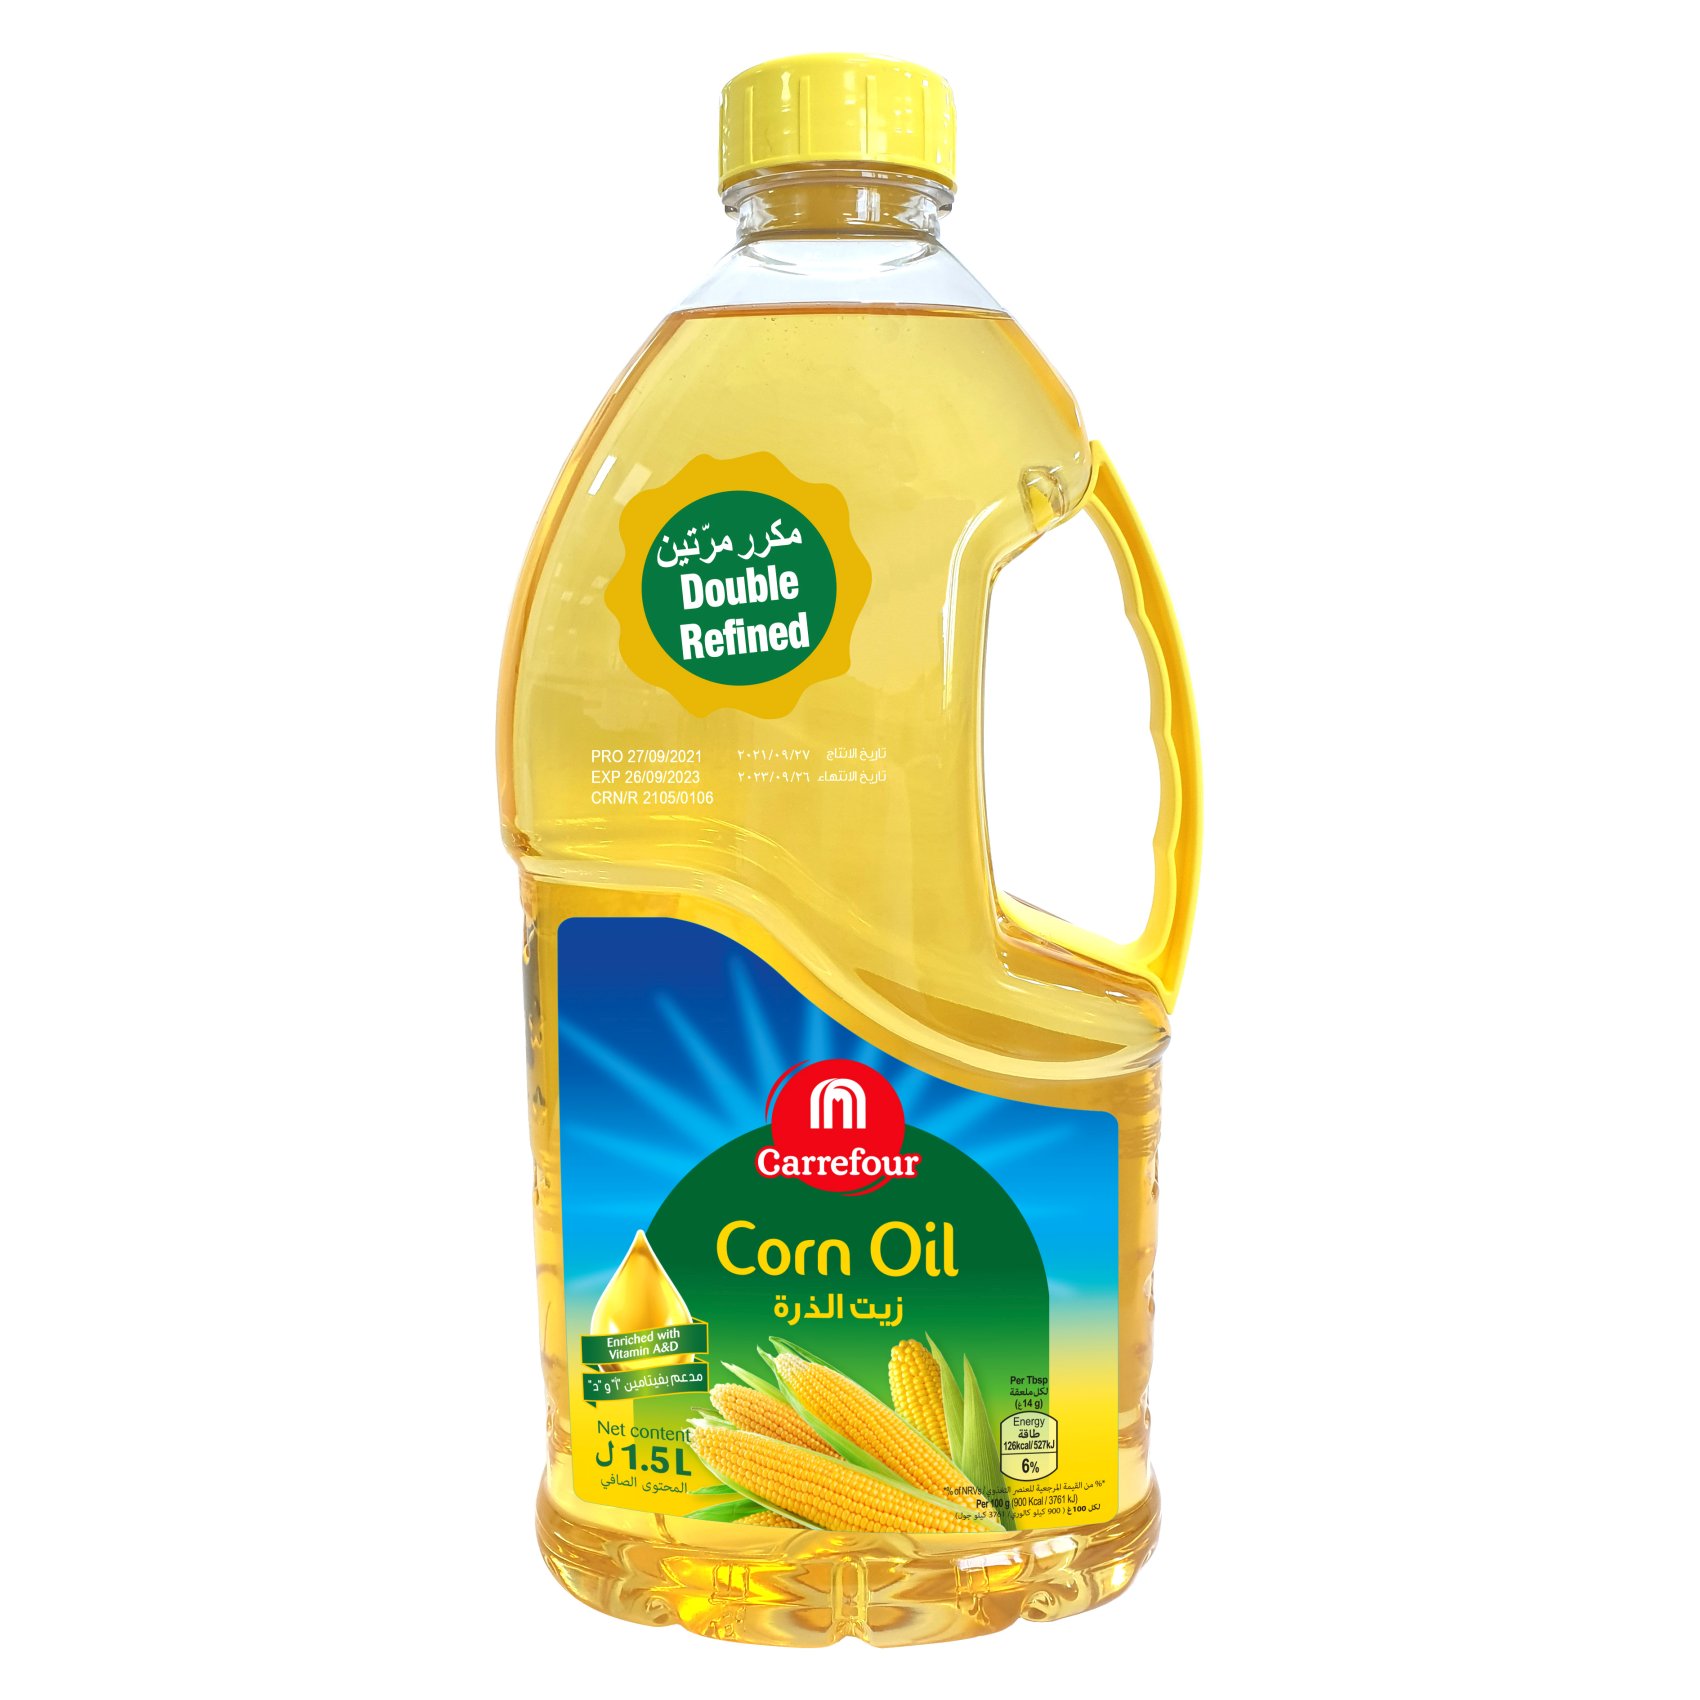 Carrefour Double Refined Corn Oil 1.5L